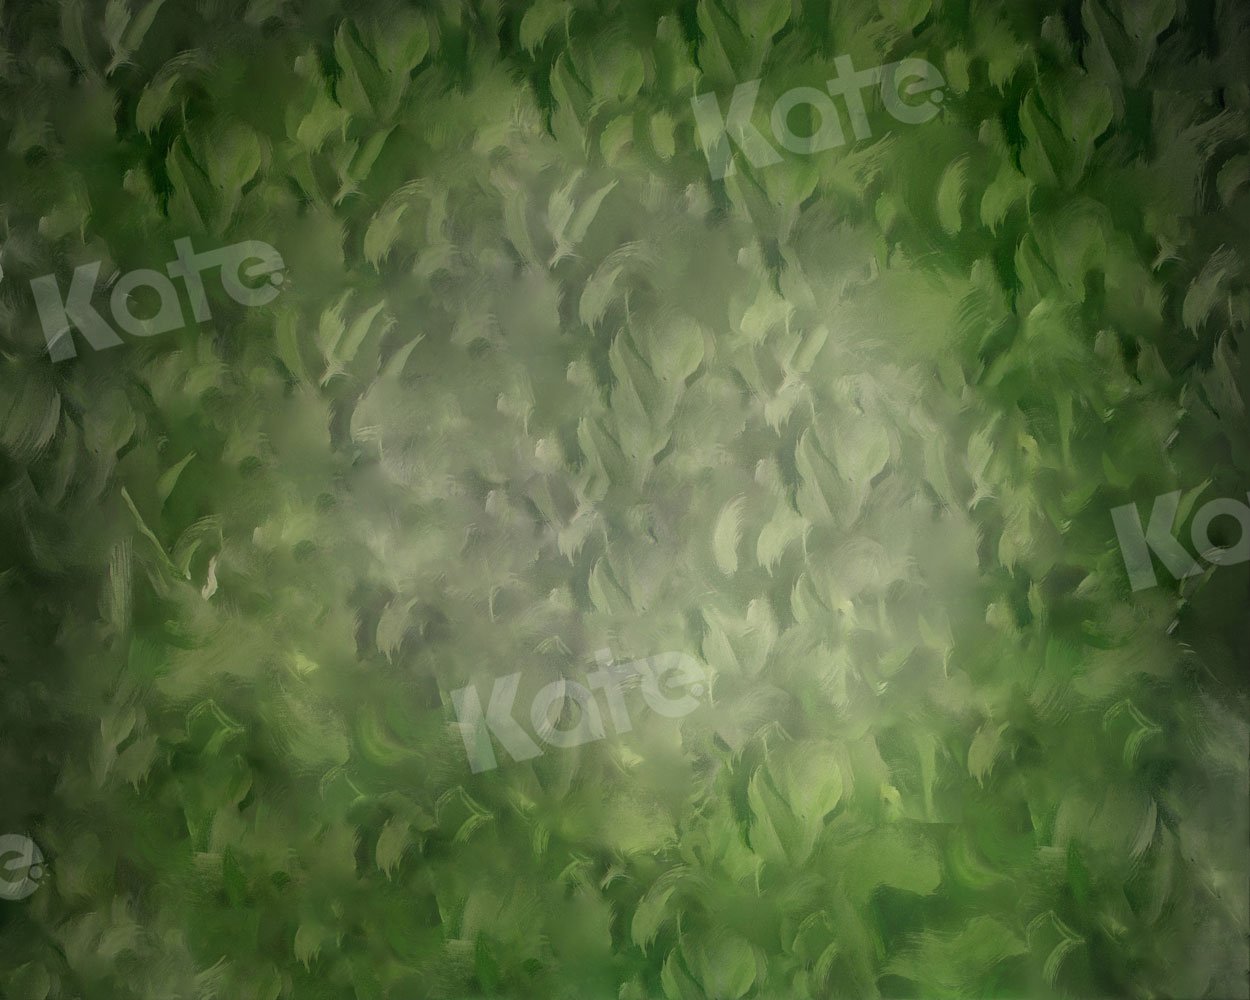 Kate Alfombra de piso de goma con textura abstracta verde para fotografía